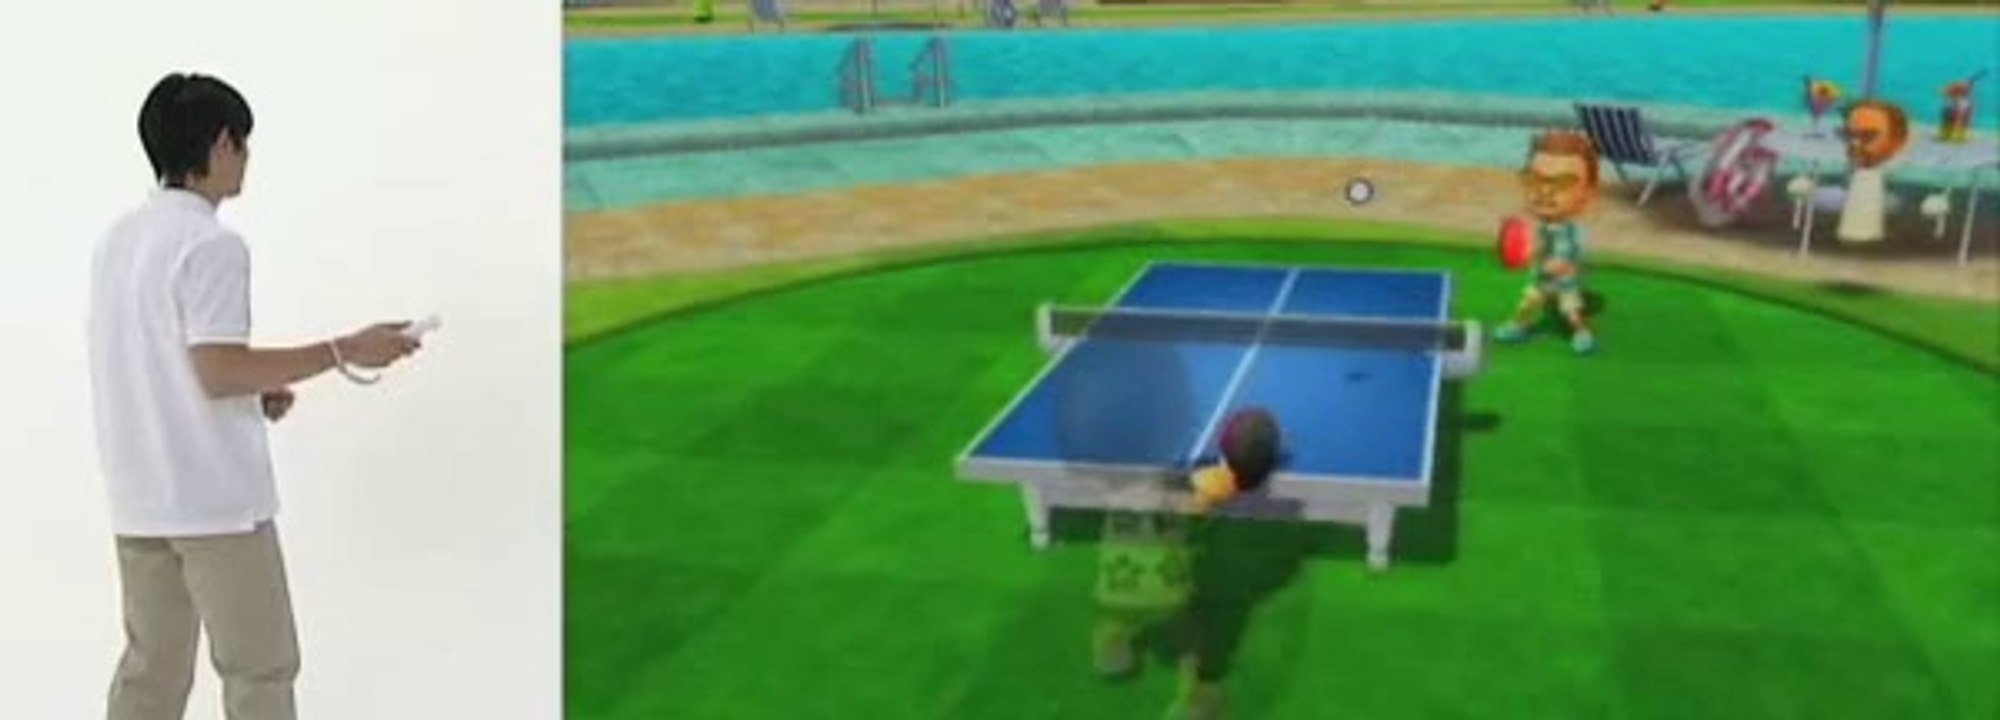 Wii Sports Resort - Ping Pong - Vidéo Dailymotion